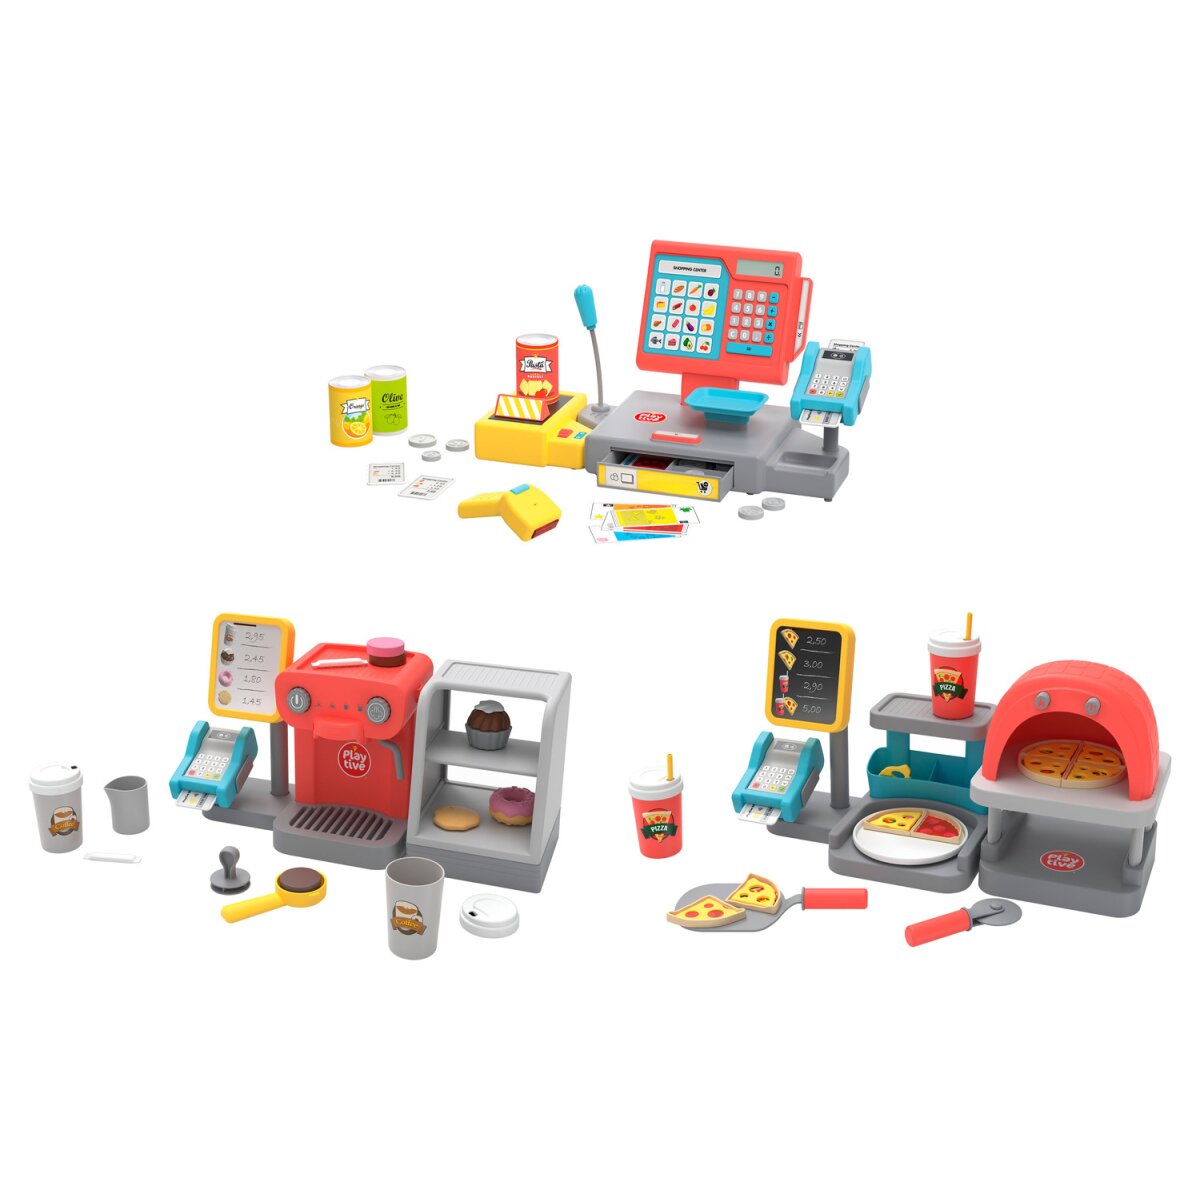 Playtive Spielzeugkasse - 12,99 € / Cafe-Shop B-Ware, Pizza-Shop 